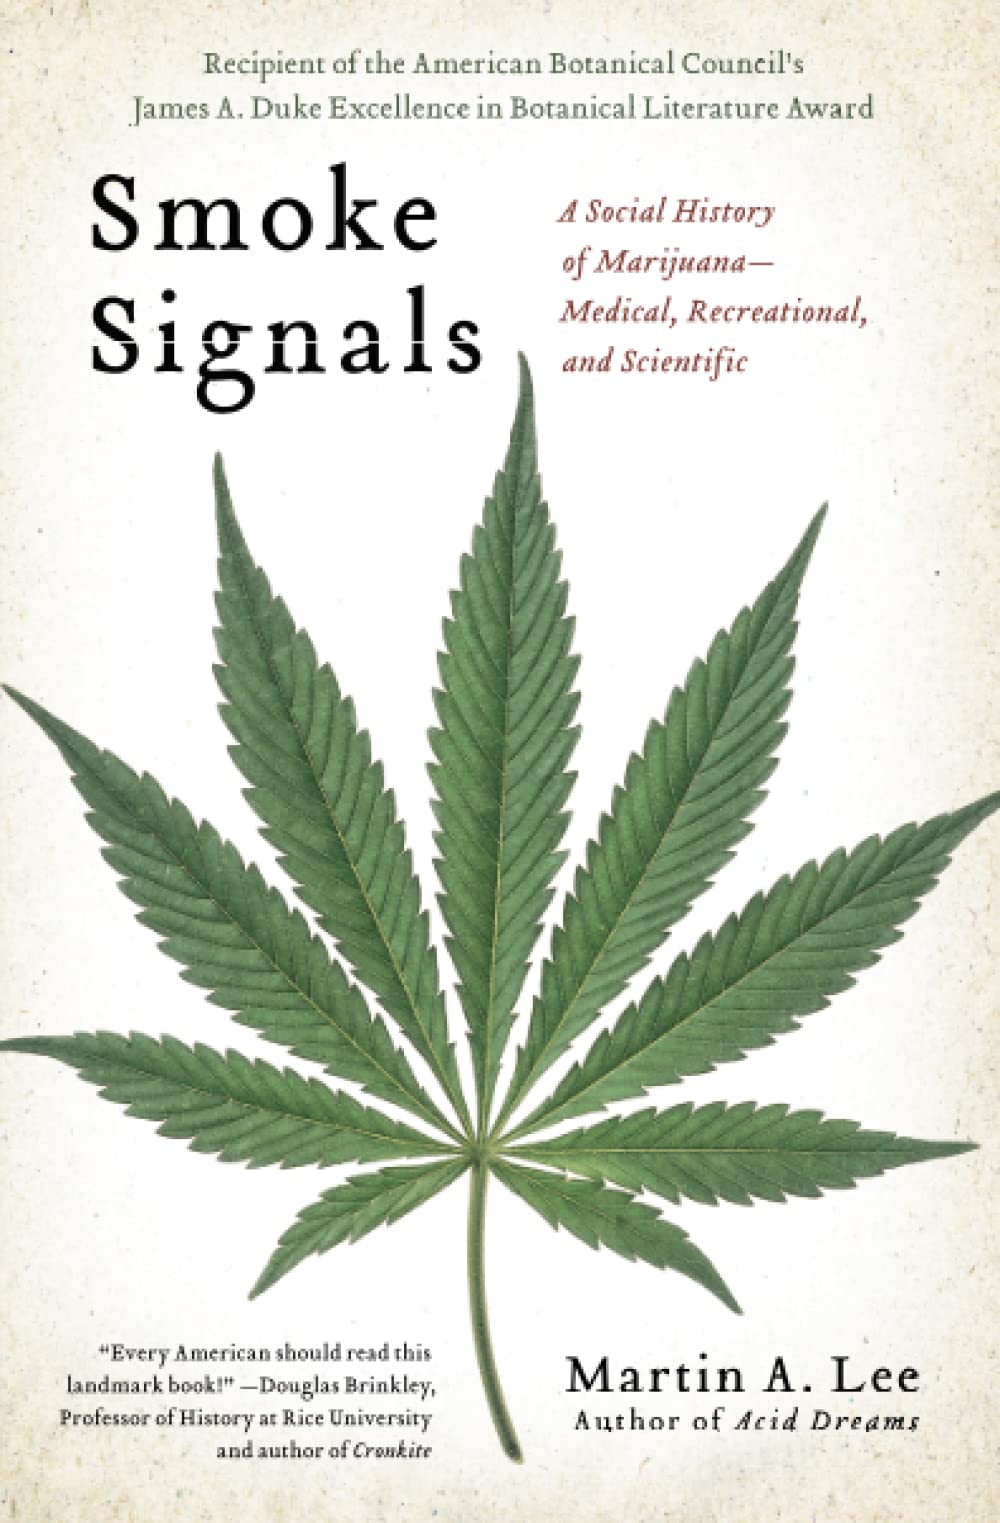 Smoke Signals: A Social History of Marijuana, by Martin A. Lee